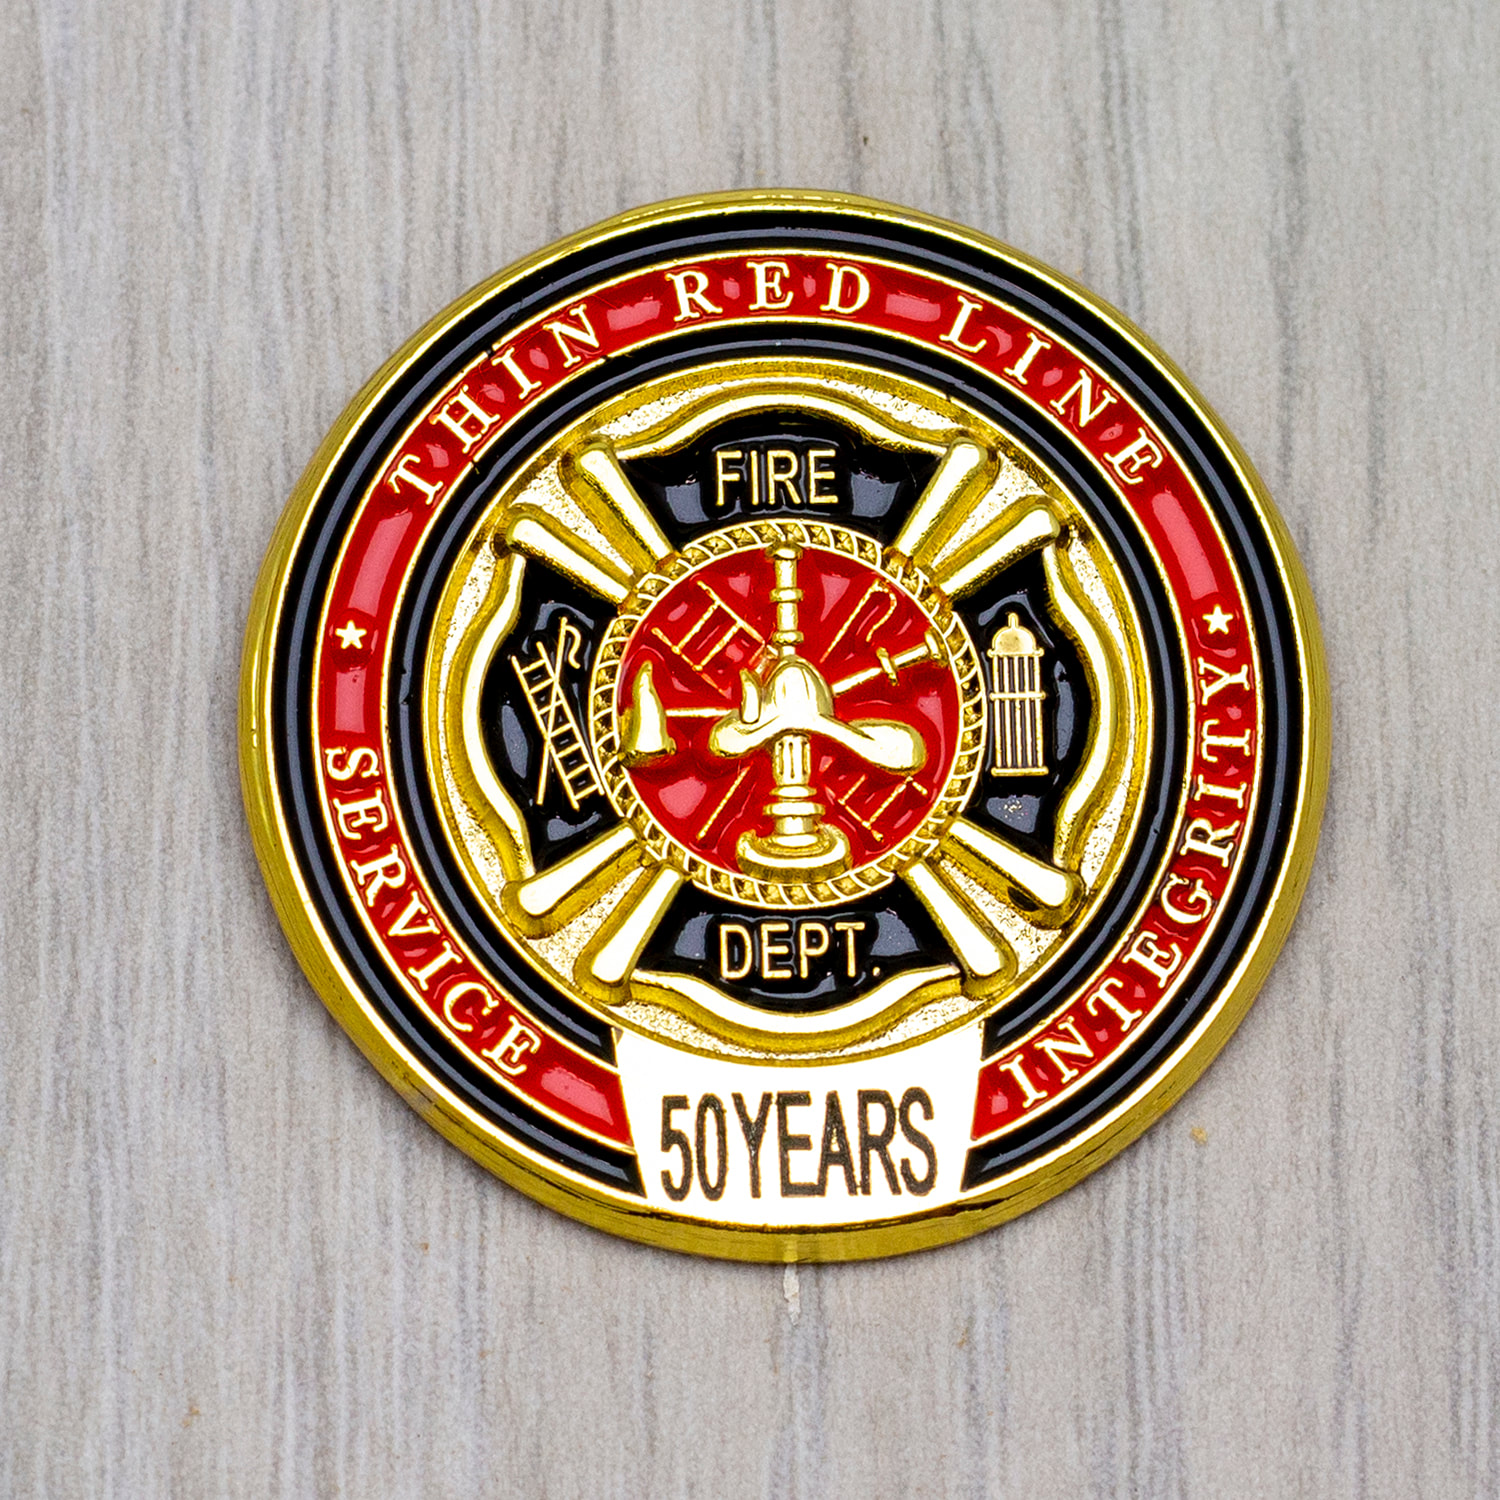 FIRE DEPT RED LINE HONOR Hero FIREFIGHTER Hat Pin P02344 EE 